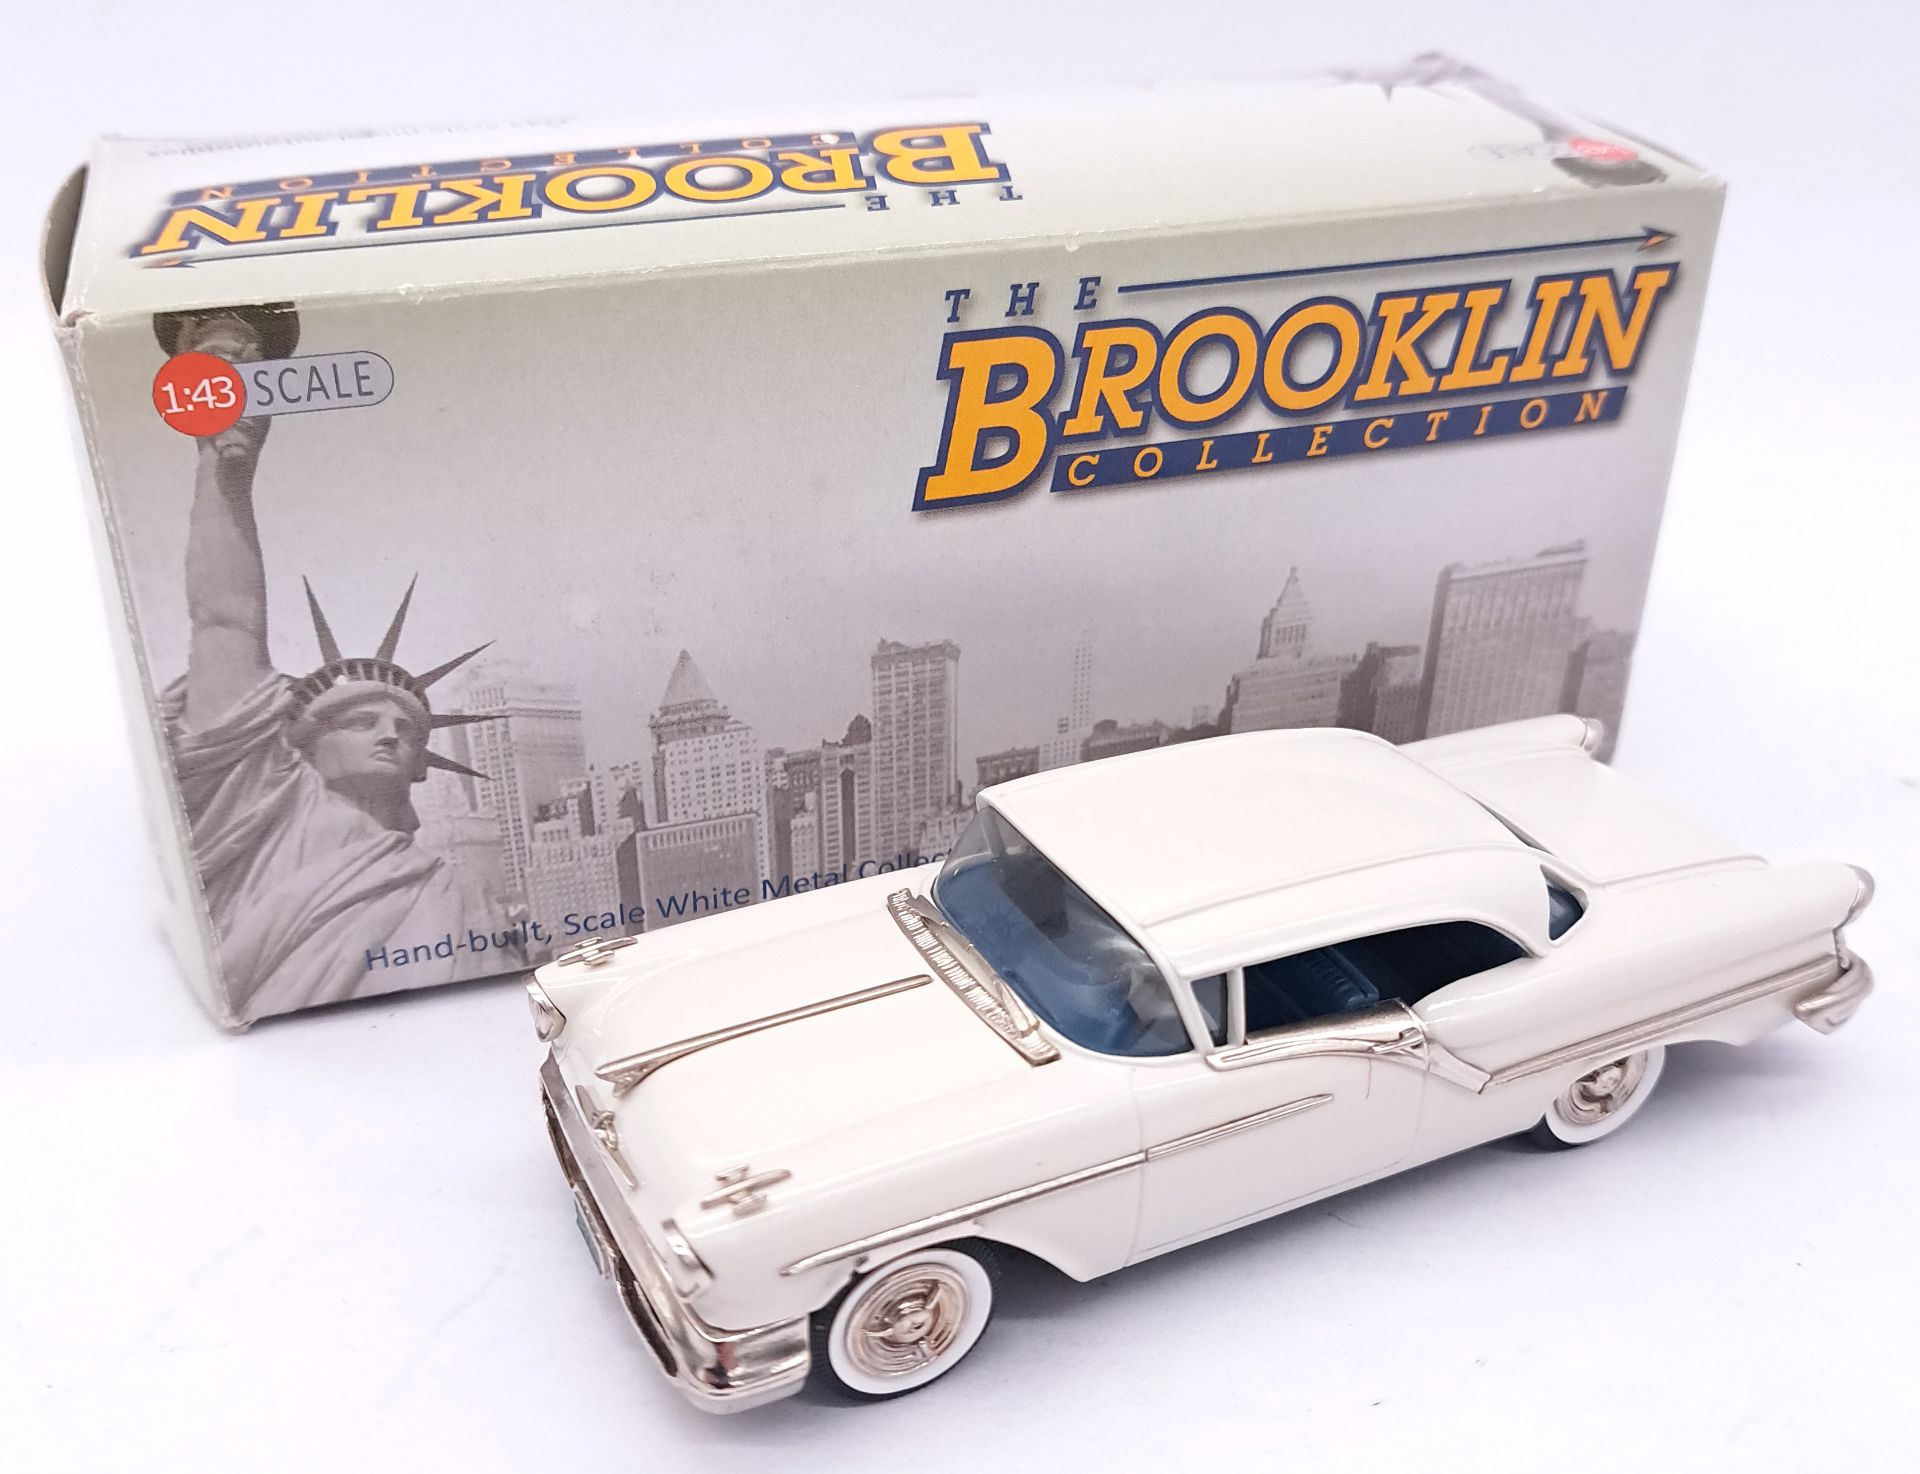 Brooklin Models a boxed 1:43 scale BRK.175